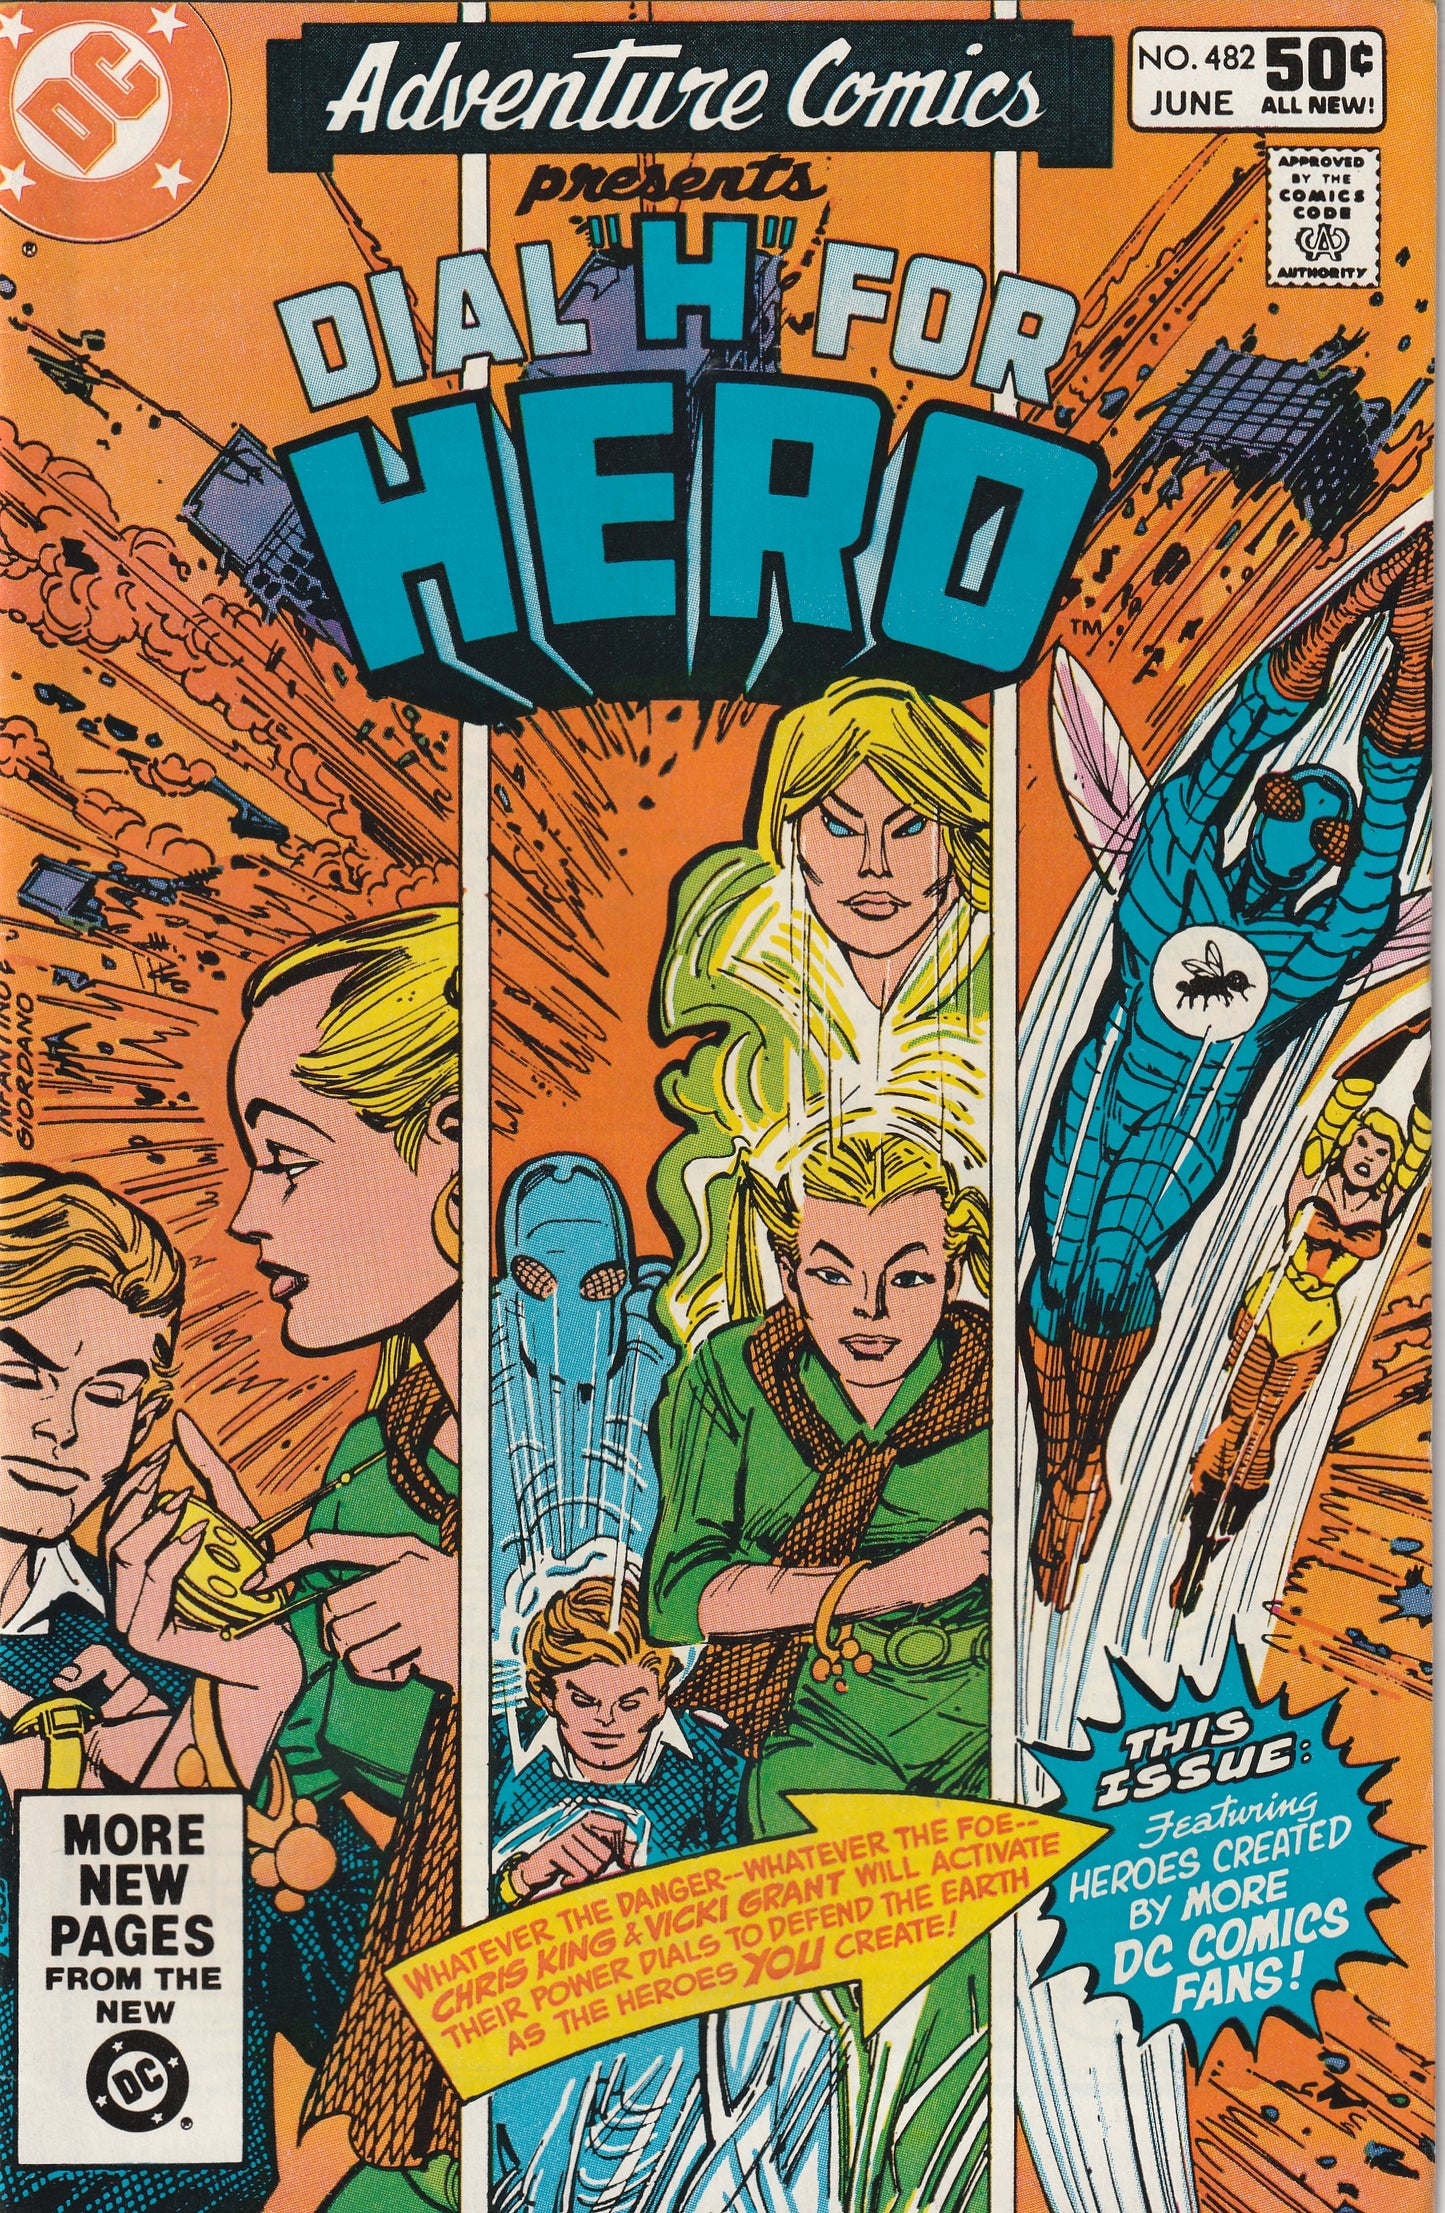 Adventure Comics #482 (1981) - Starring Dial H For Hero